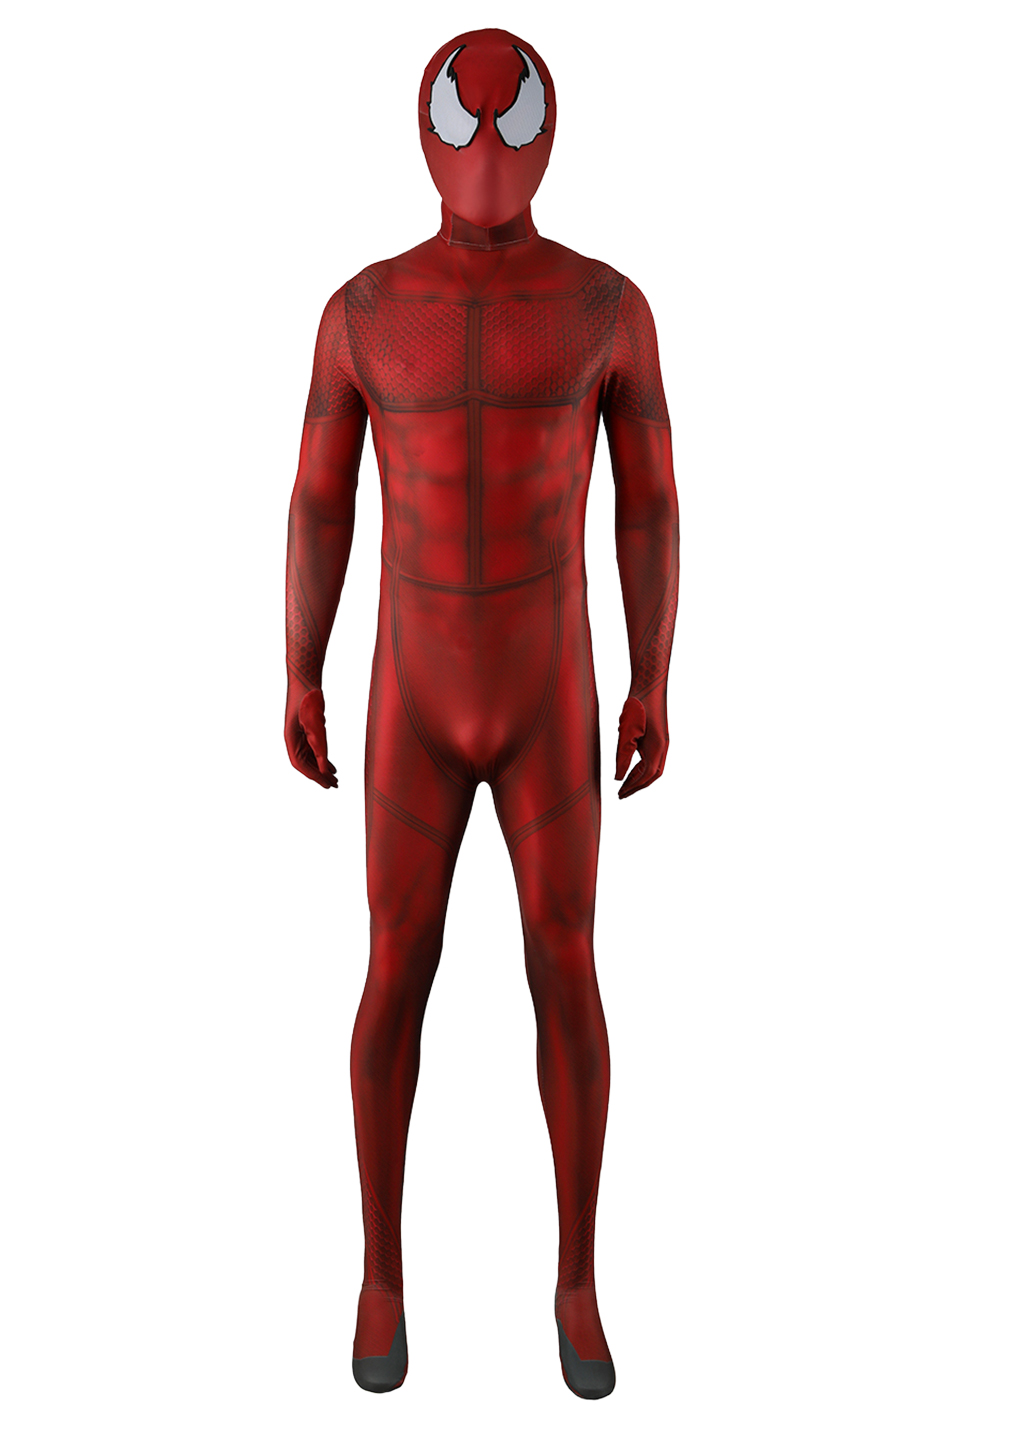 Scarlet Spider Costume Bodysuit Cosplay Ver.2 for Adult Kids